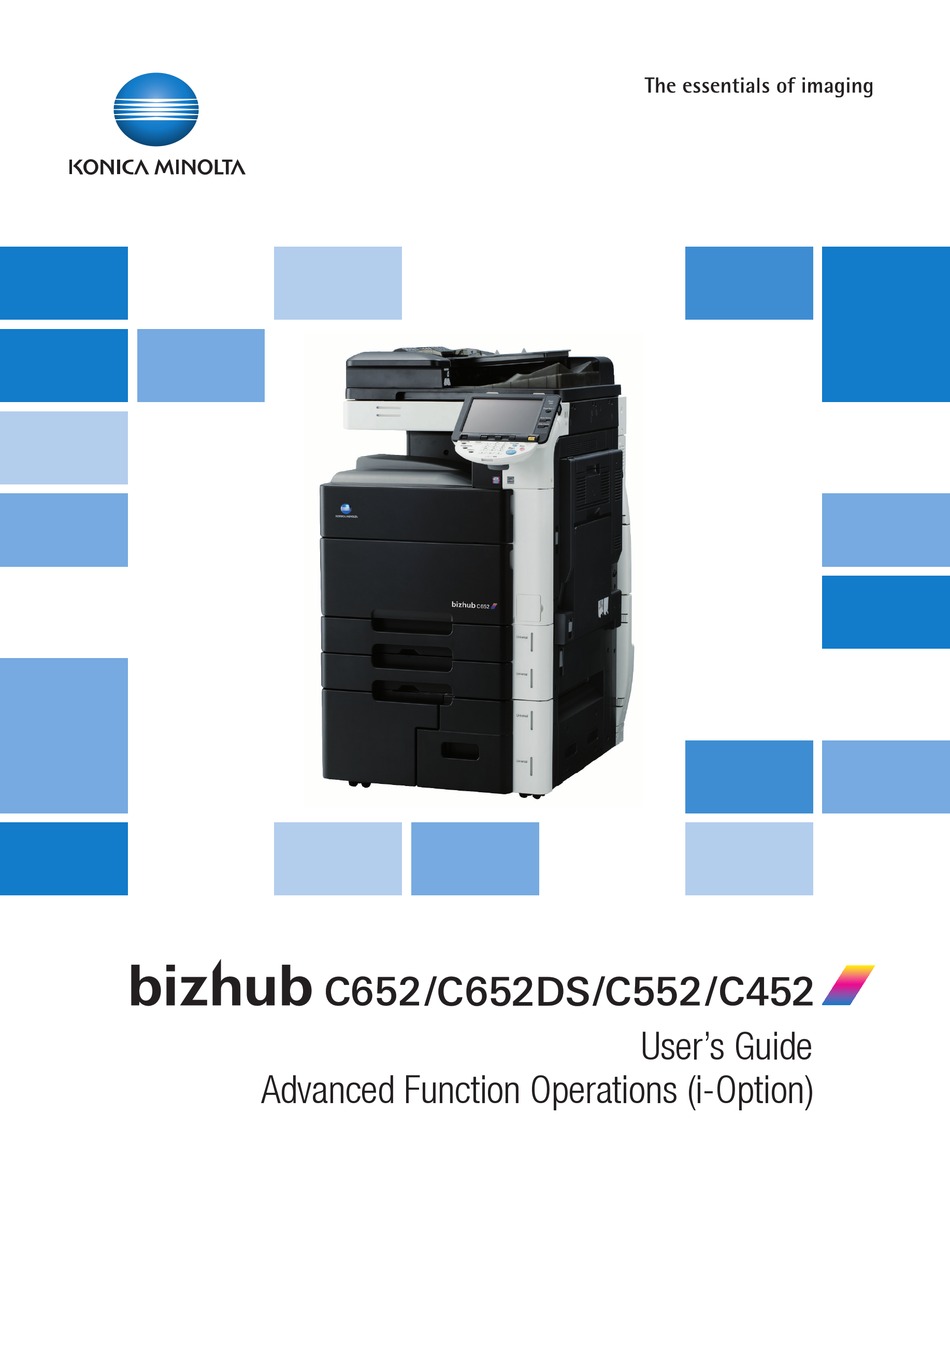 bizhub c652 scan